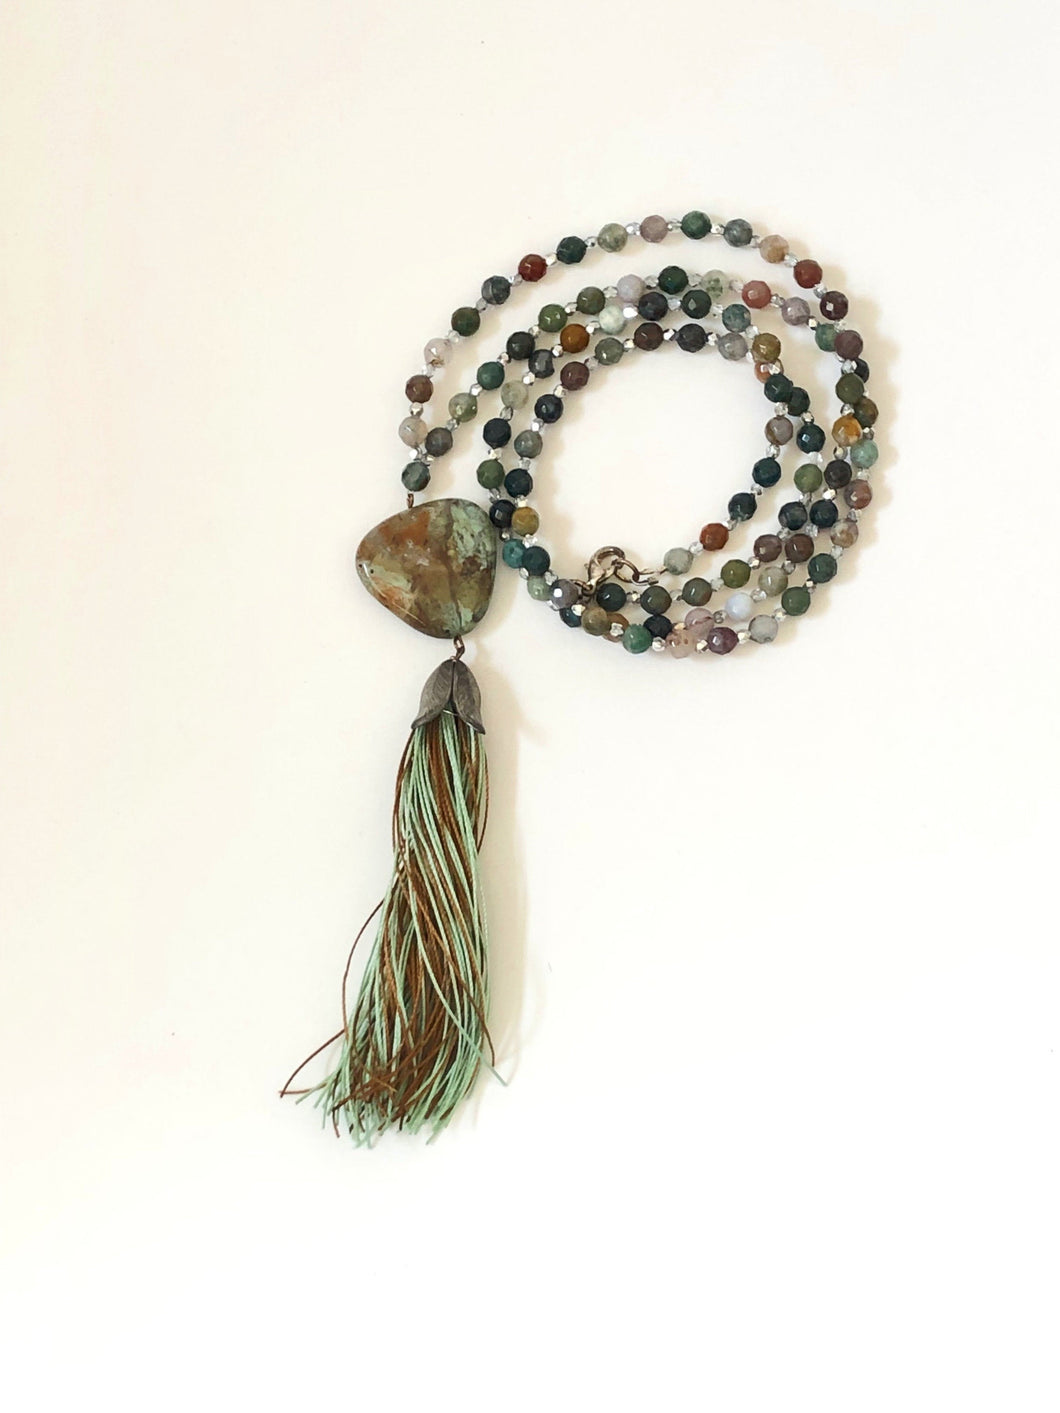 Gemstone Tasseled Mala Necklace With Beaded Jasper Beads And Opal Pendant